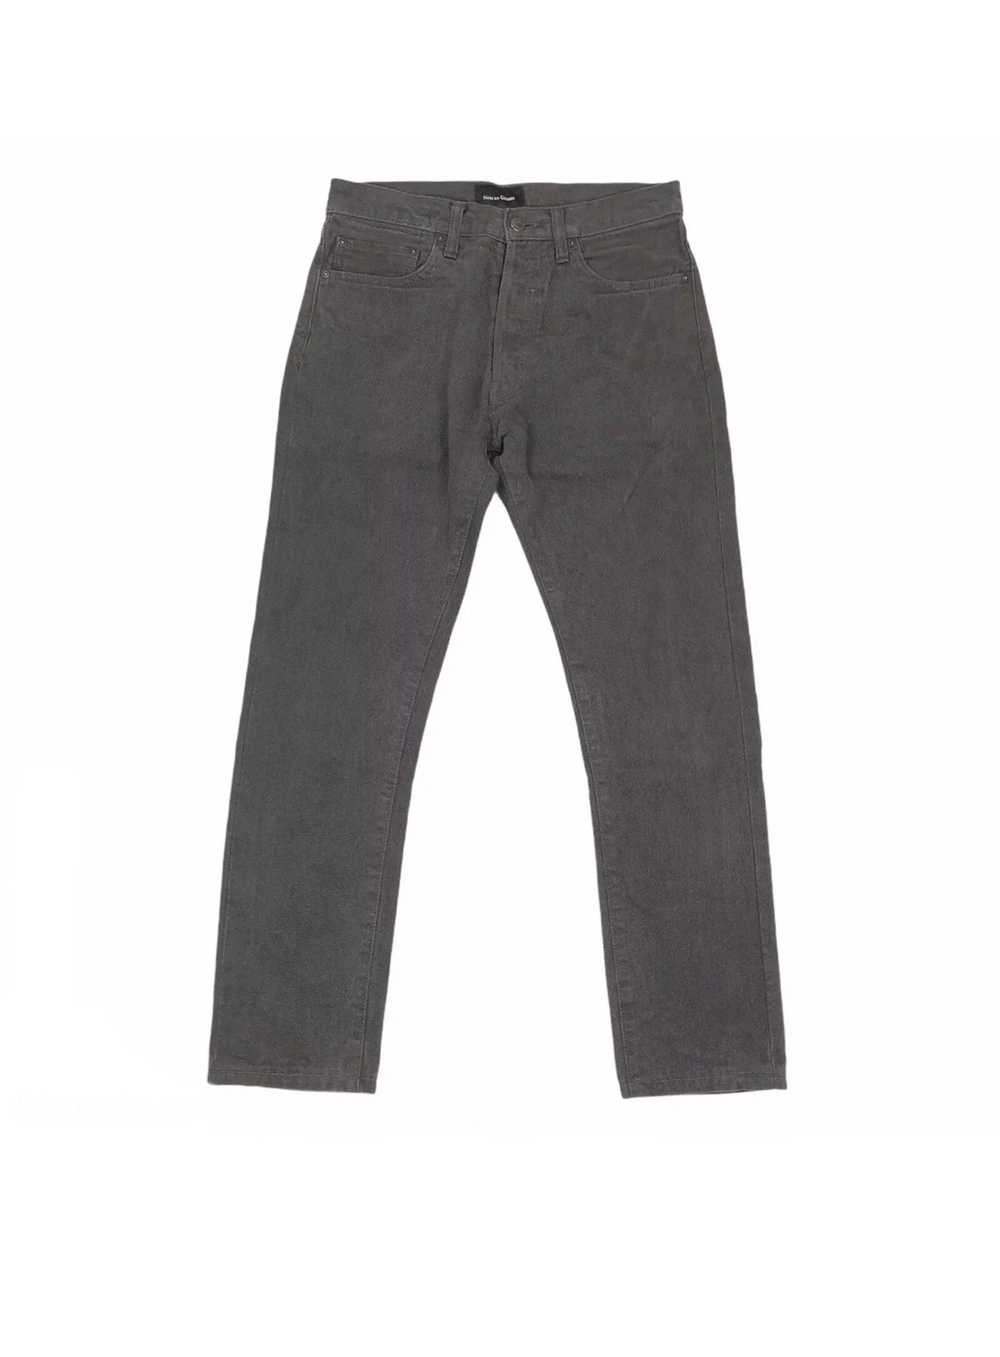 Nom De Guerre Nom De Guerre Men's Gray Slim Jeans… - image 1